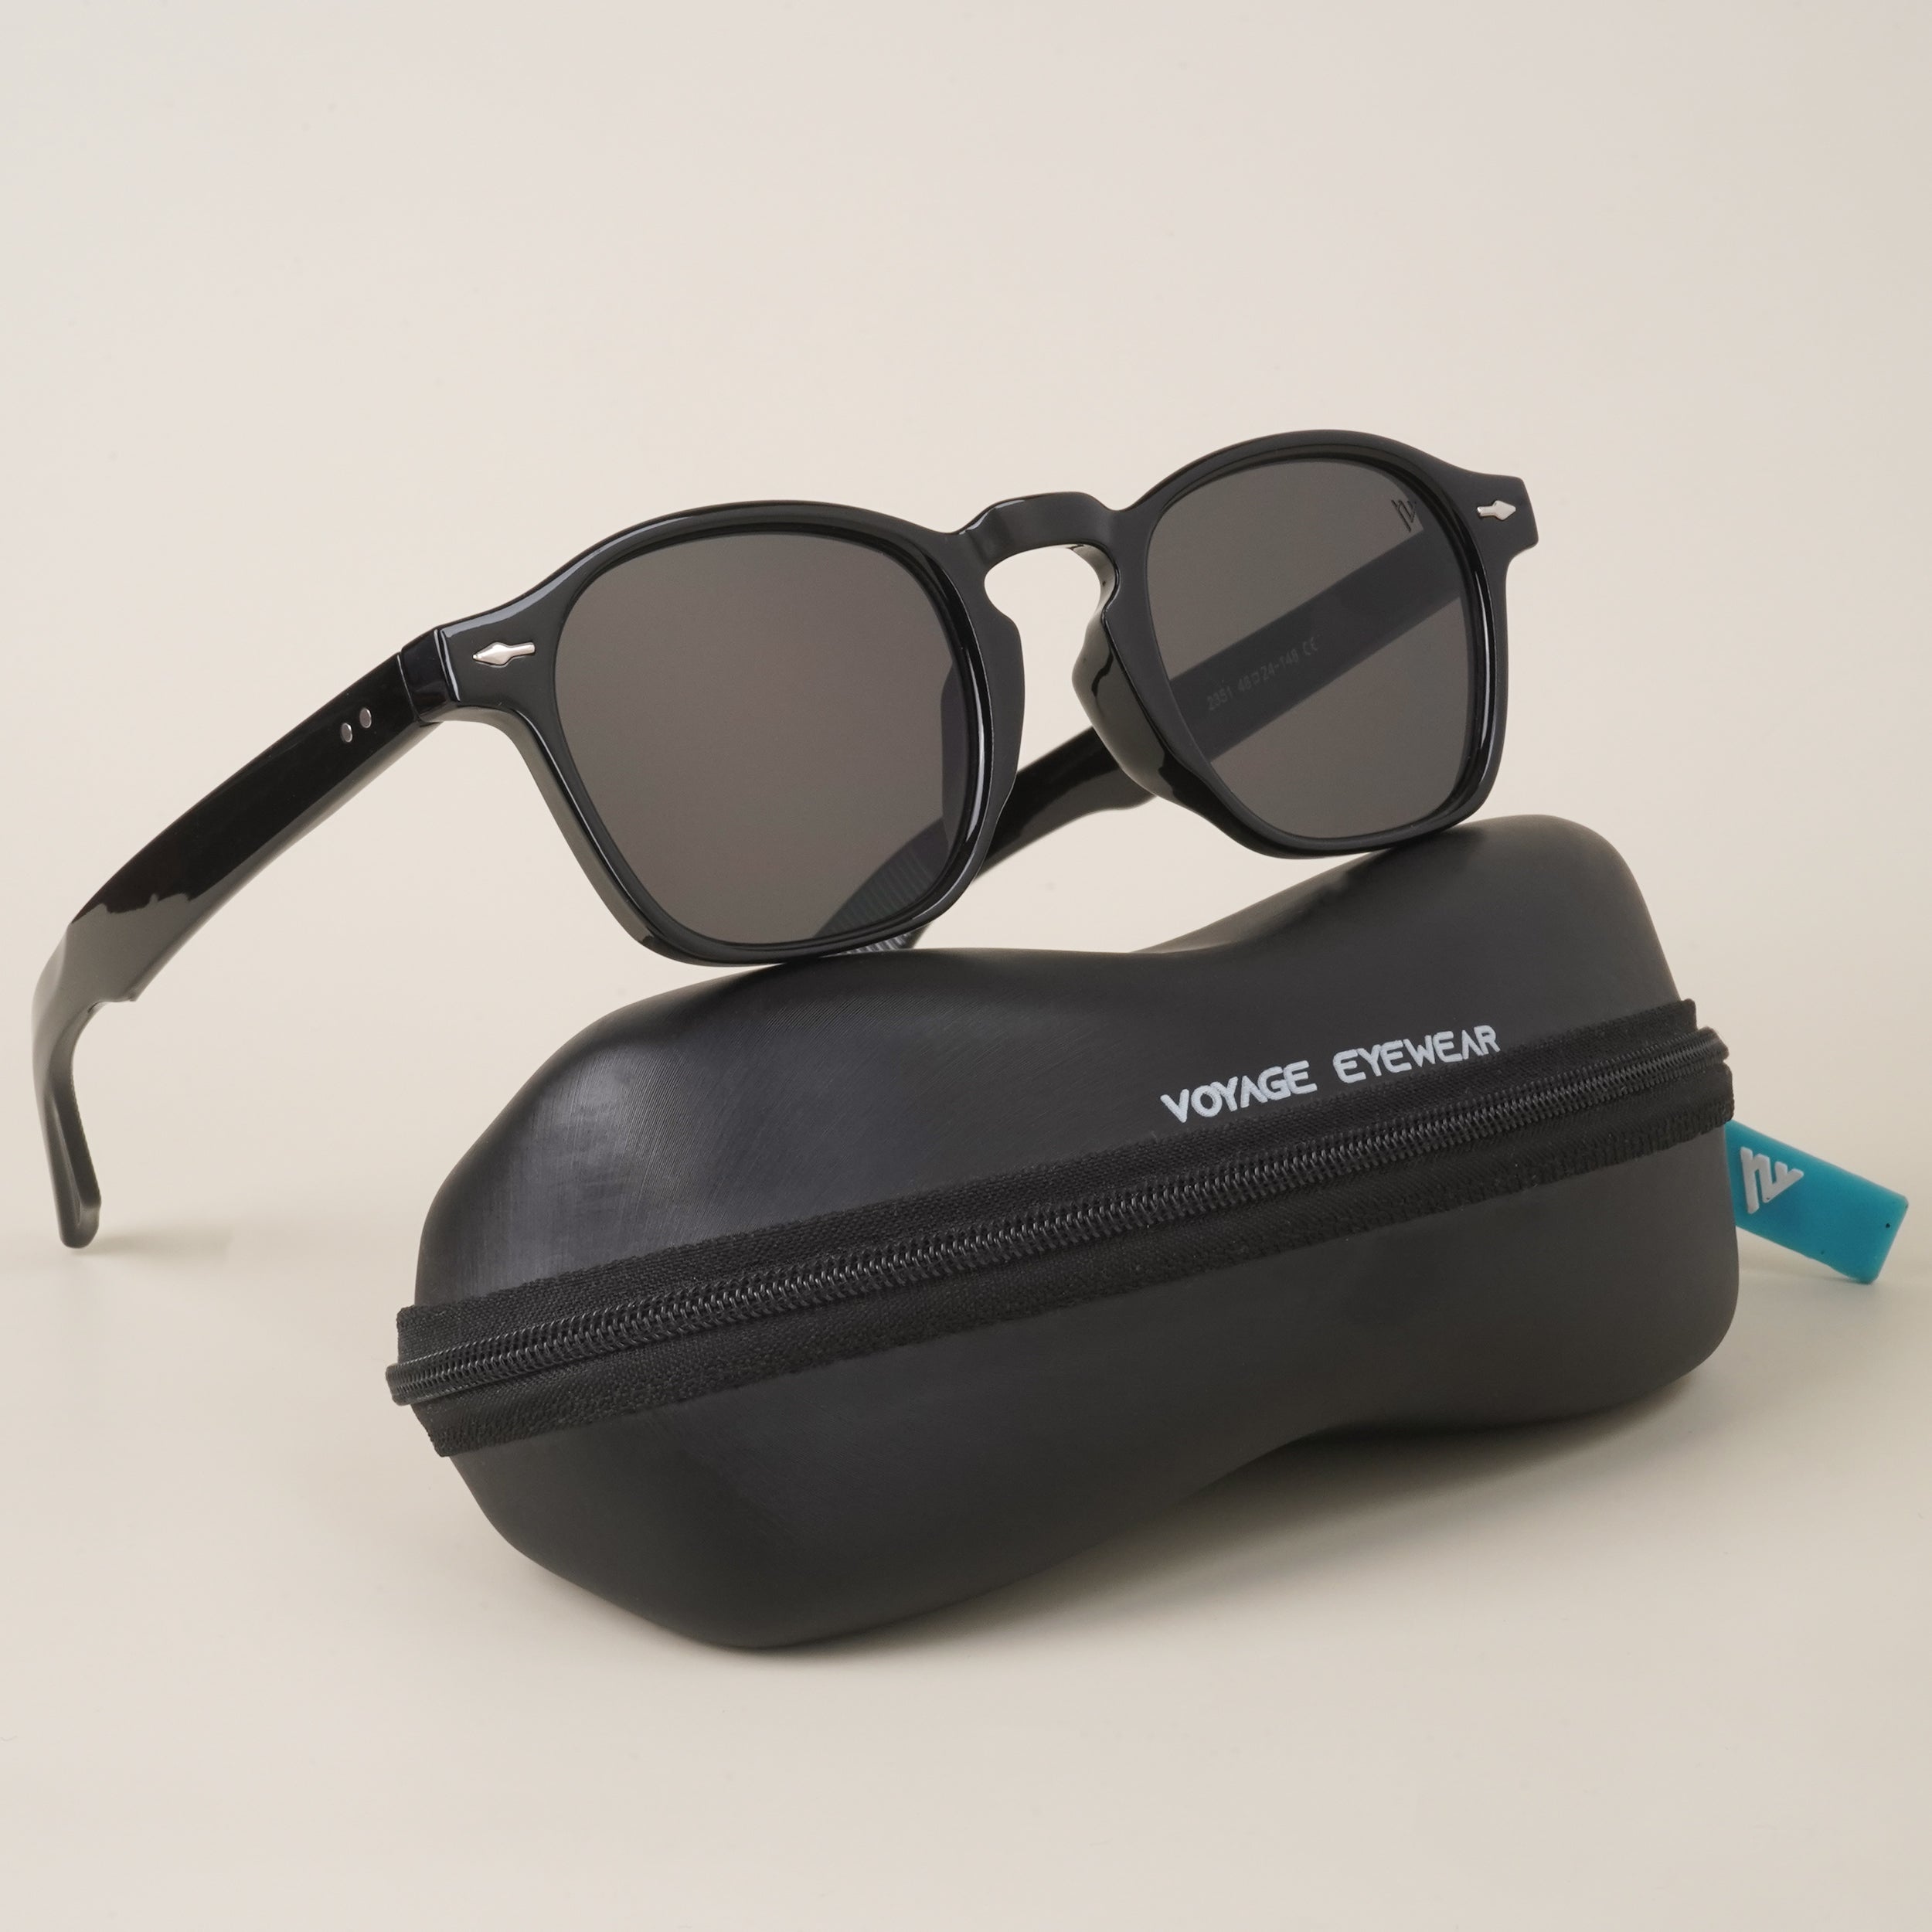 Voyage Black Round Sunglasses for Men & Women (2351MG3960)